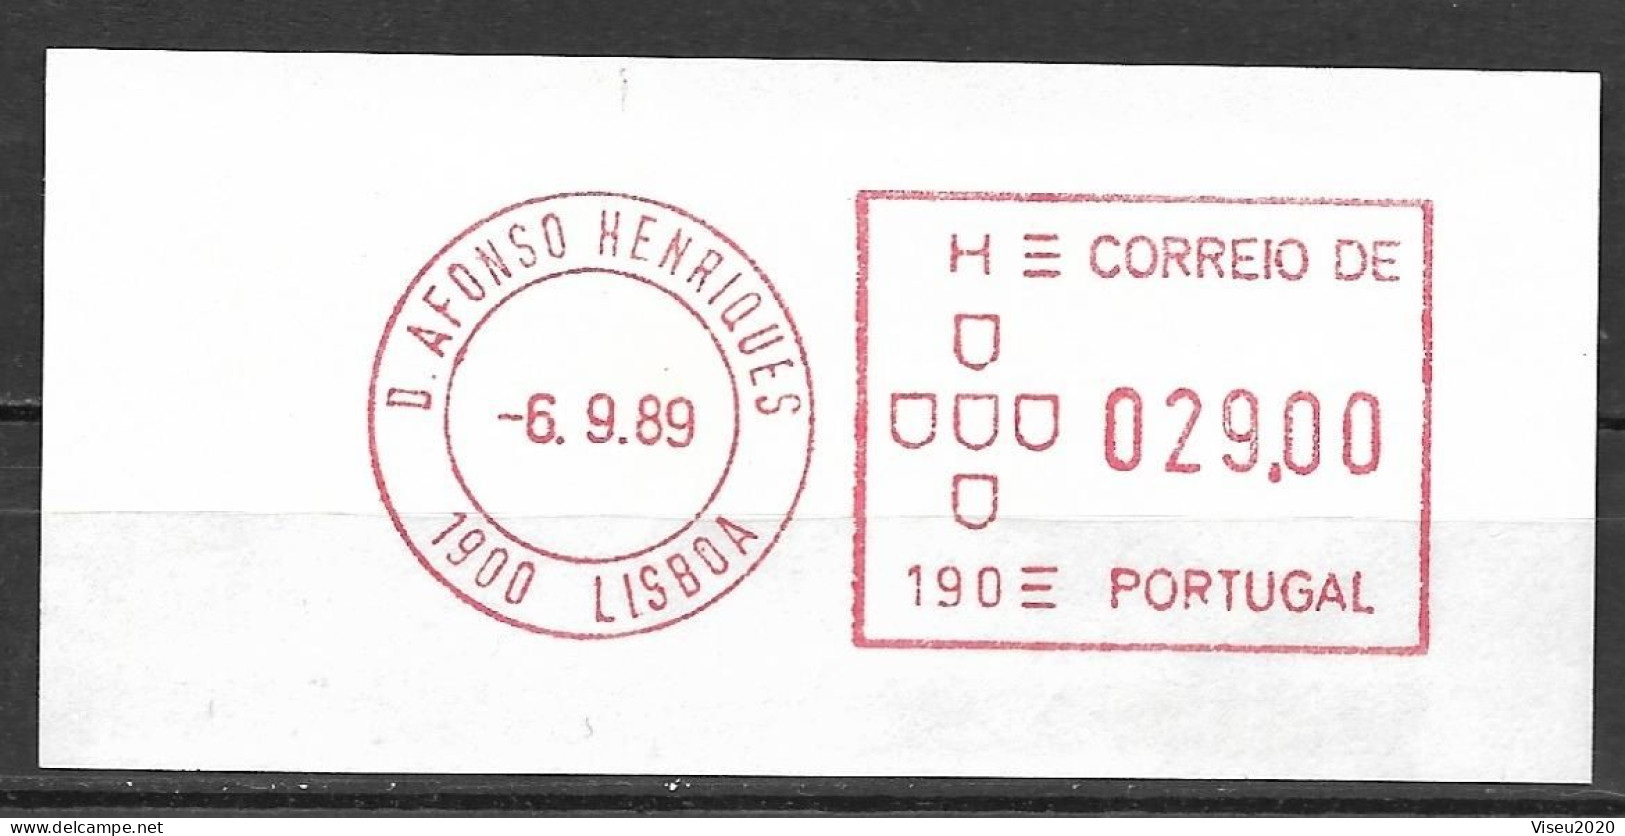 Portugal, 1989 - Lisboa 89 - FDC